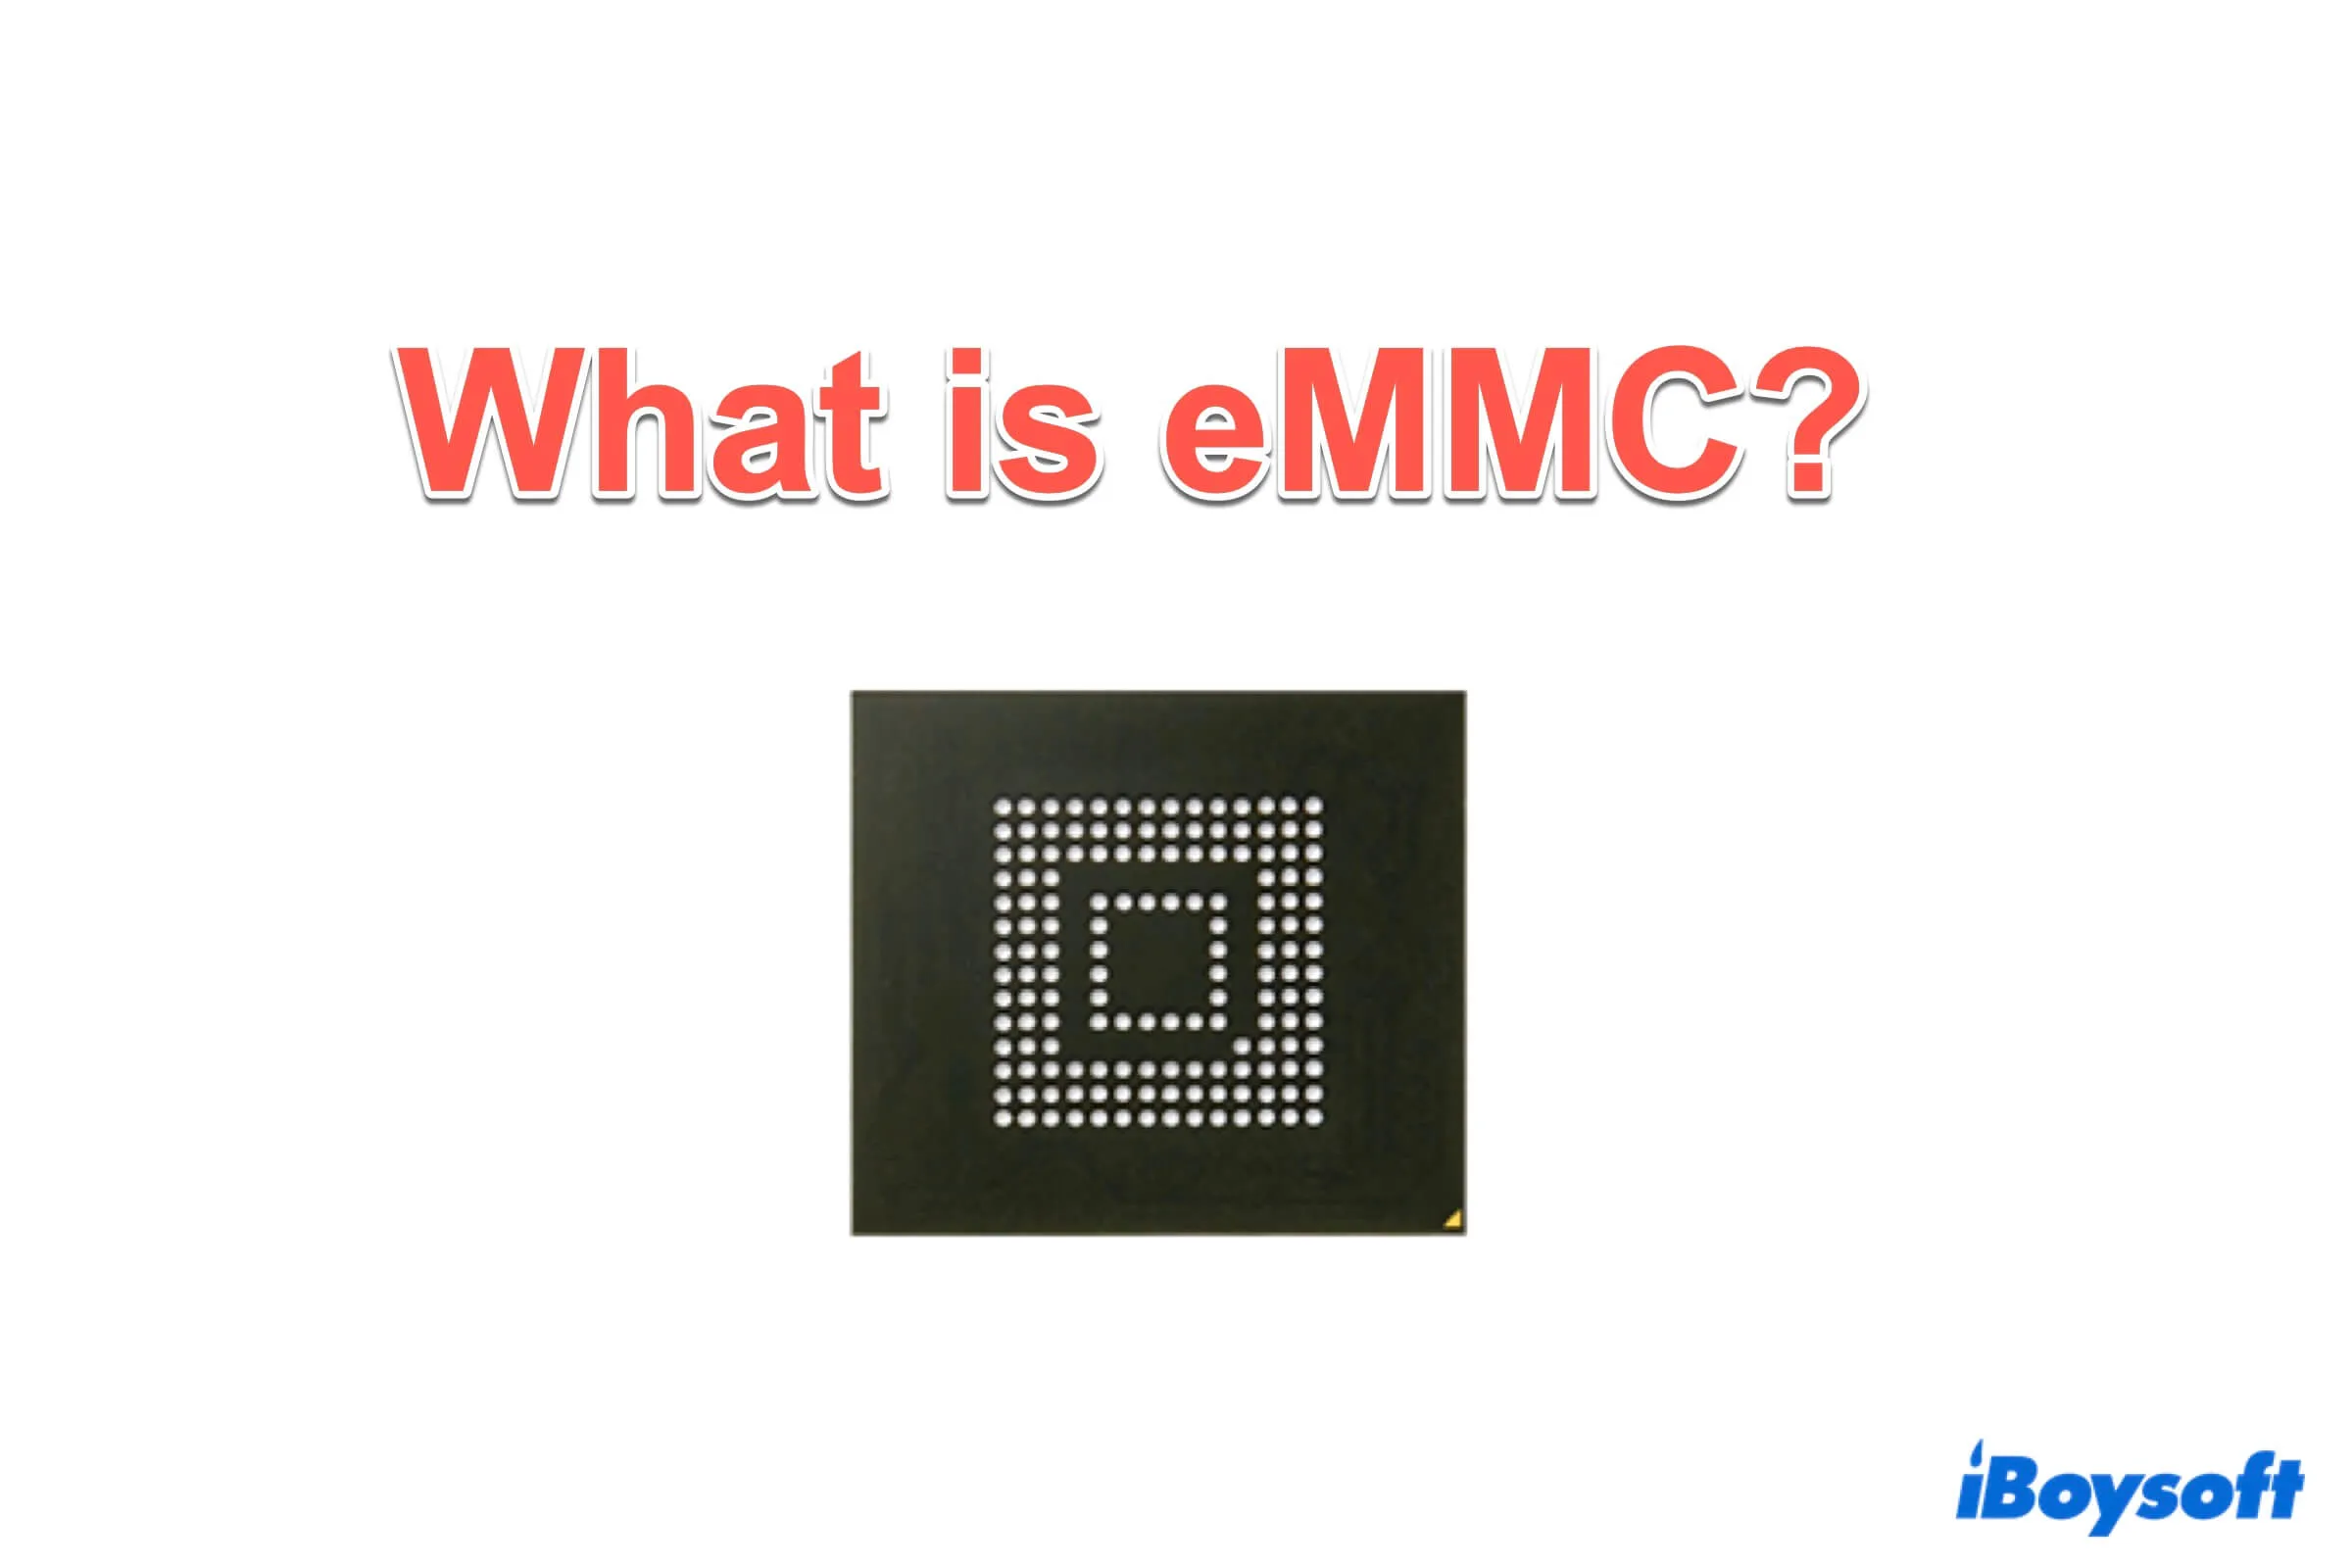 Resumo do eMMC